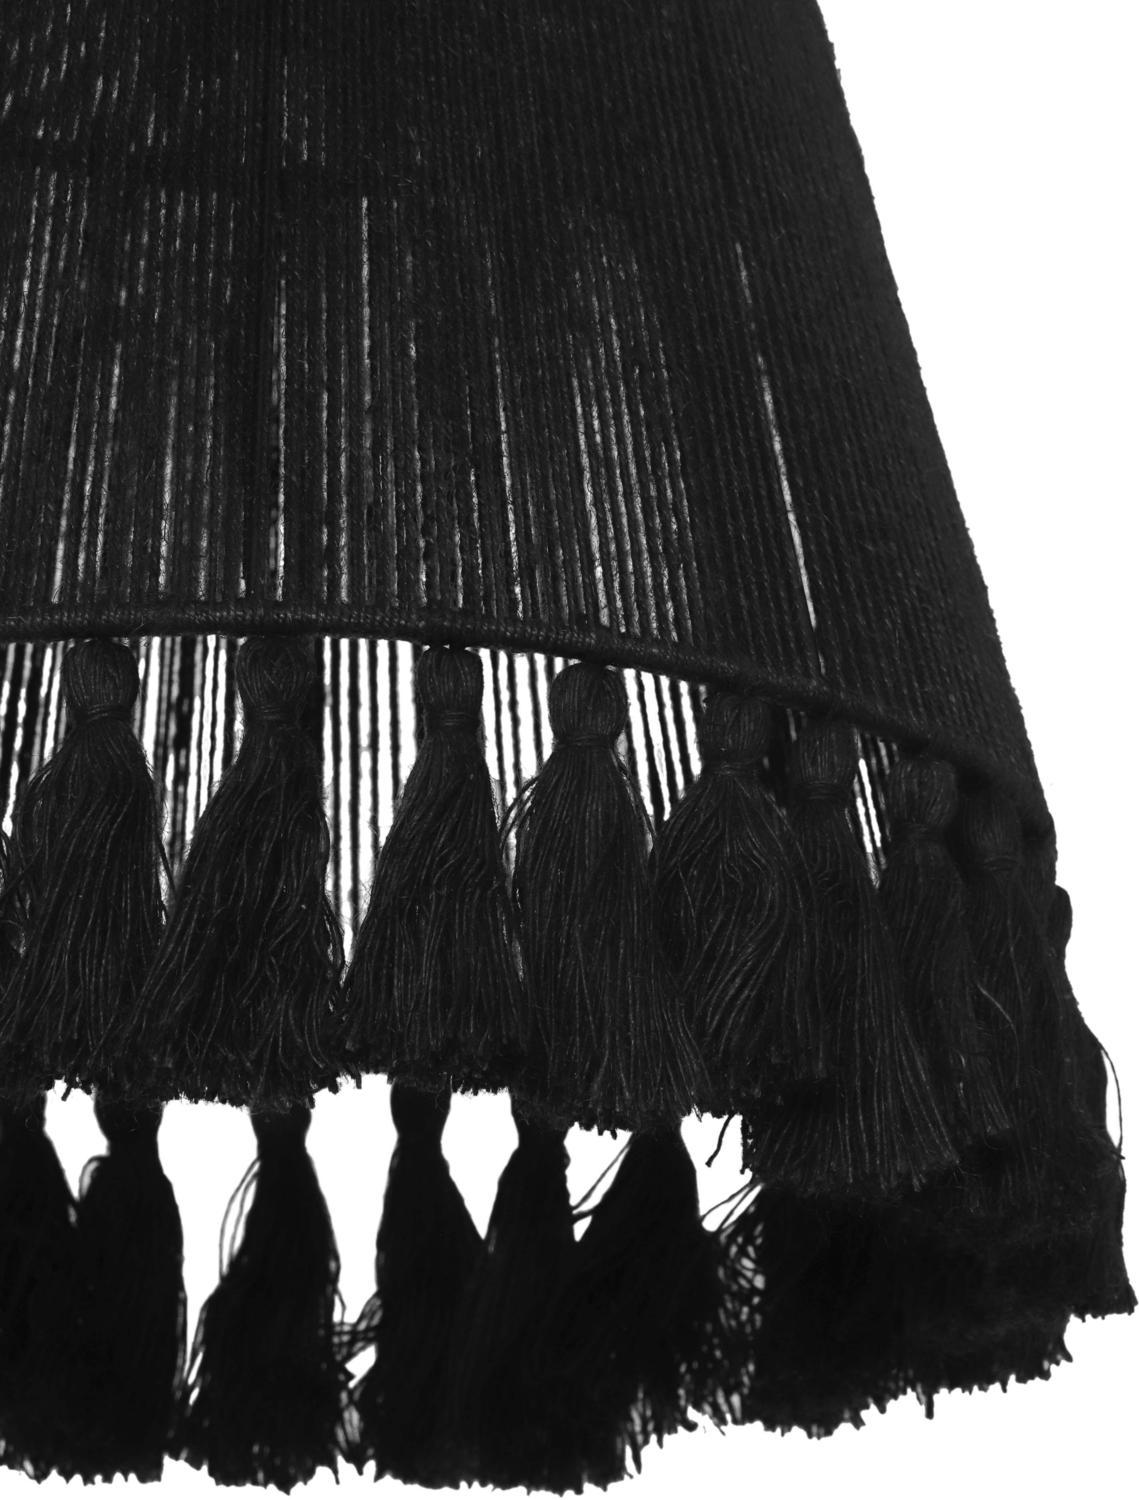 pendant light fitting ceiling rose Contemporary Design Furniture Pendants Black